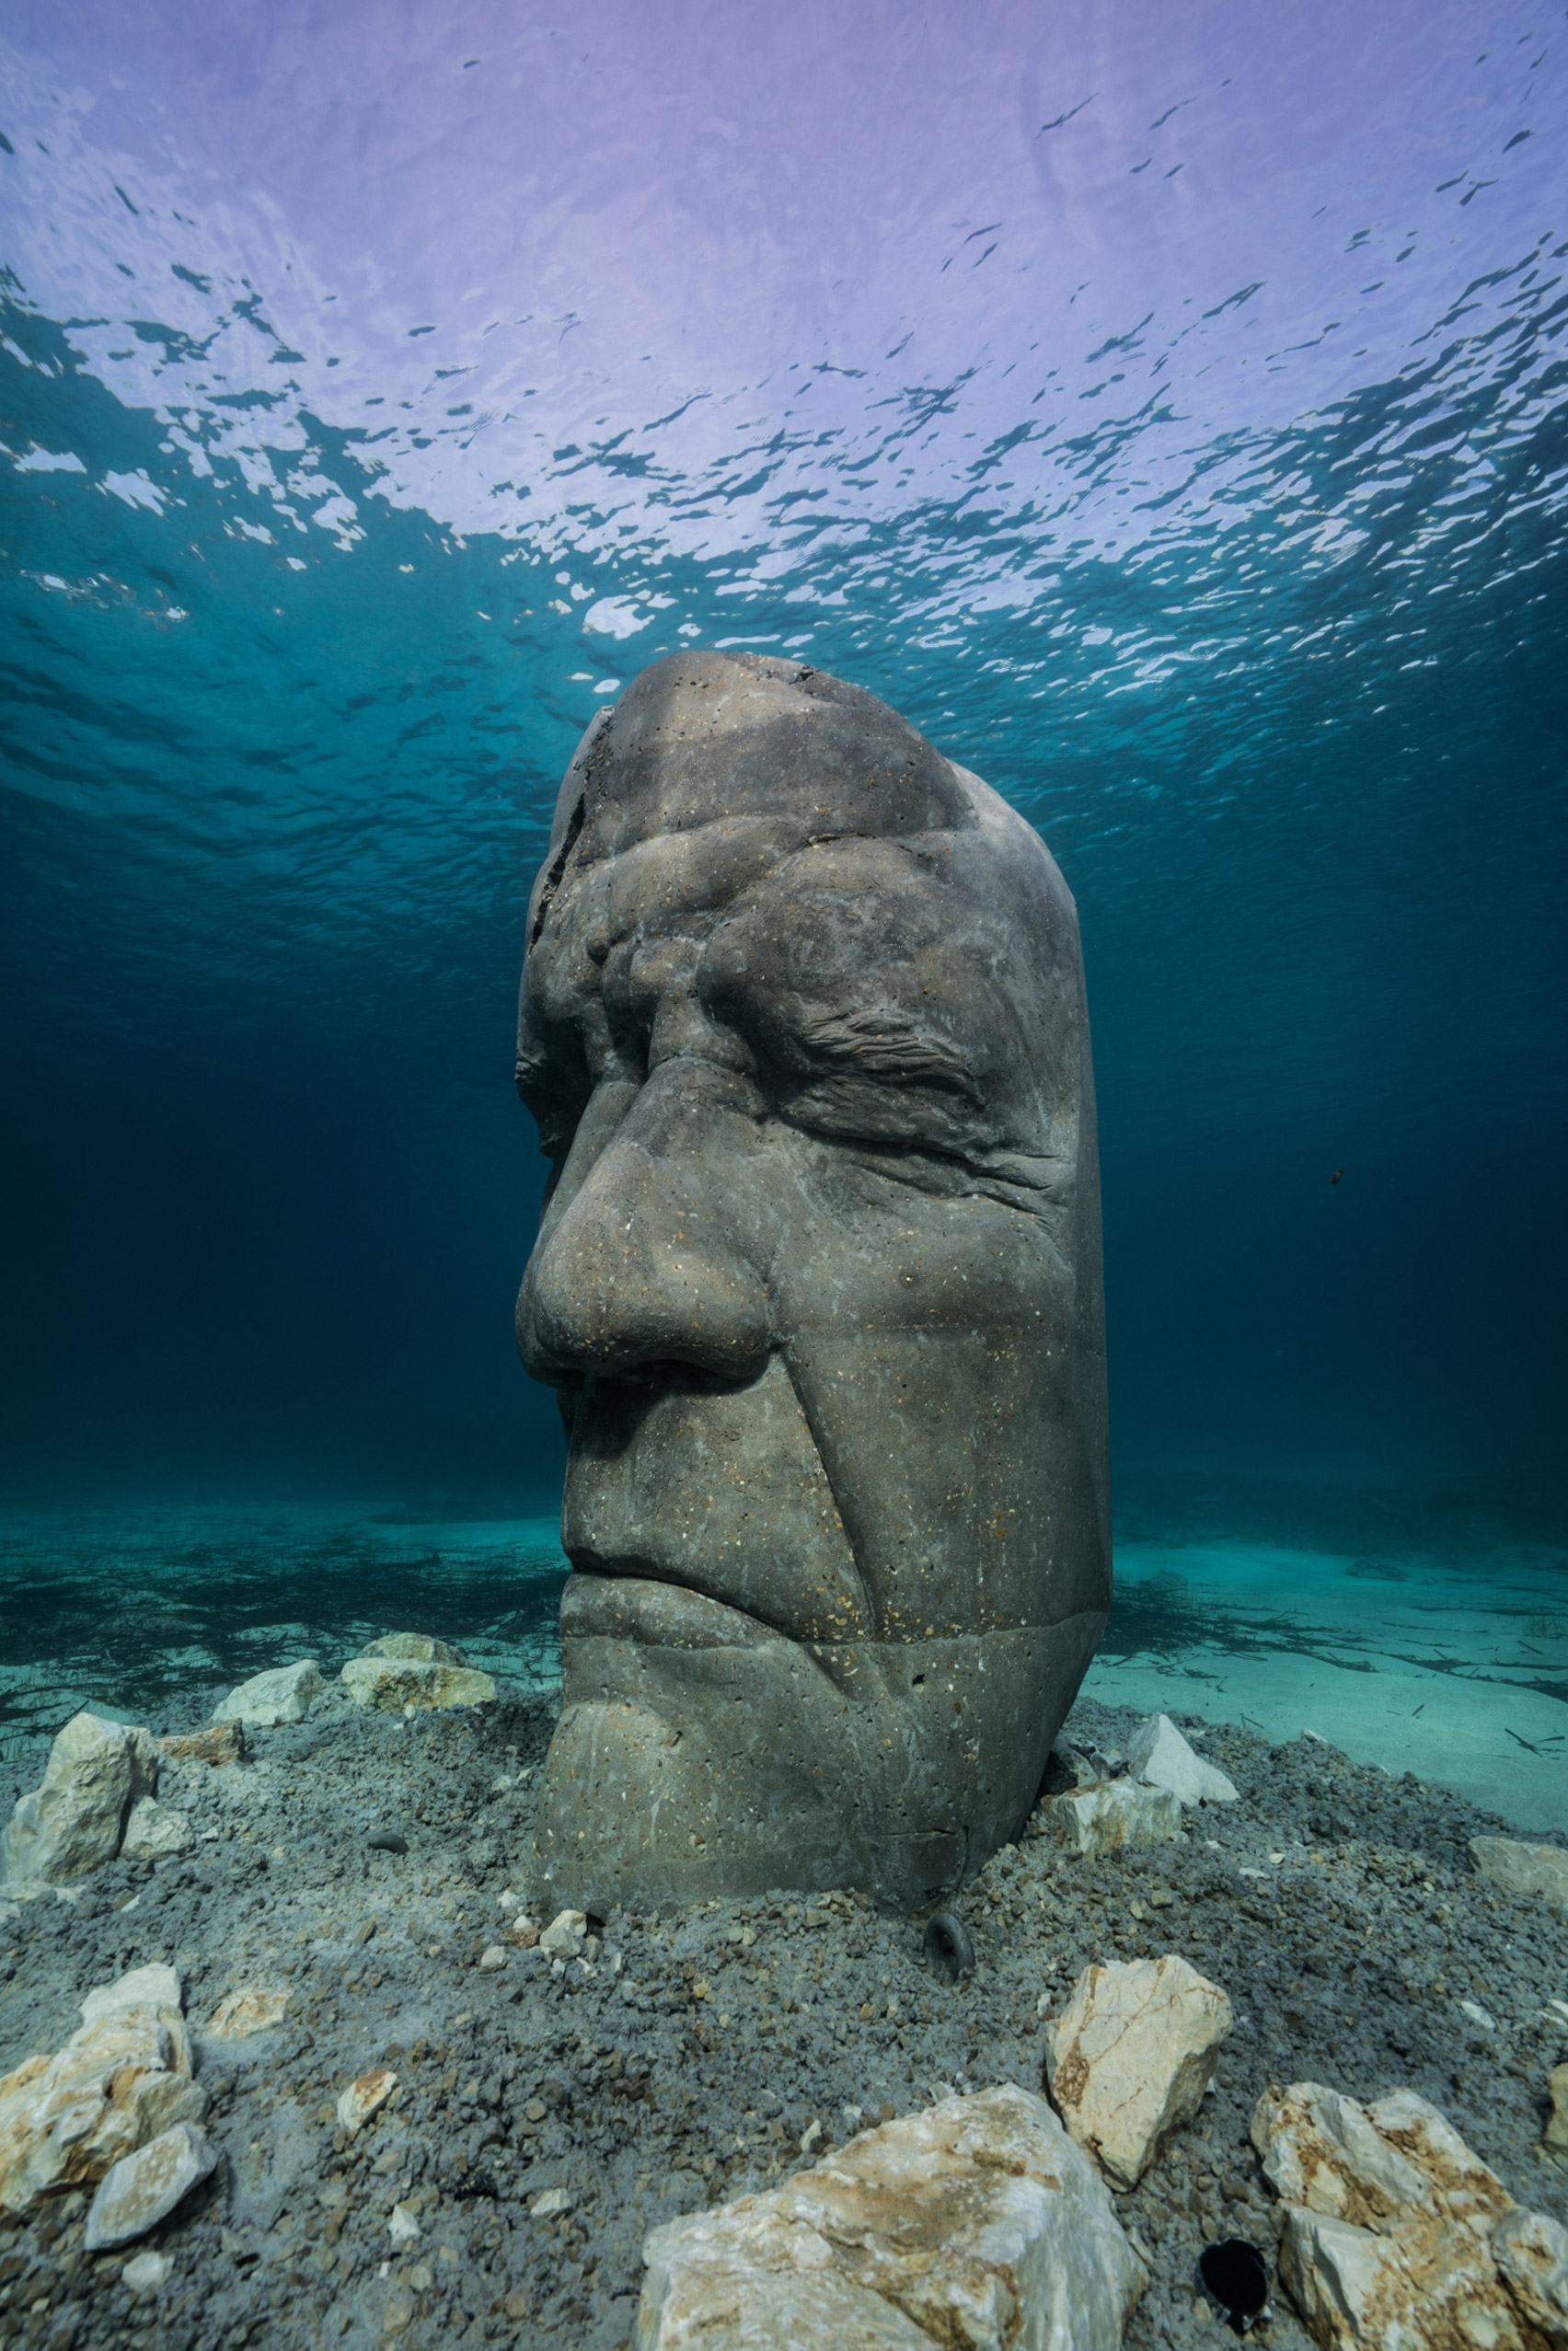 A cement sculpture of a human head under water